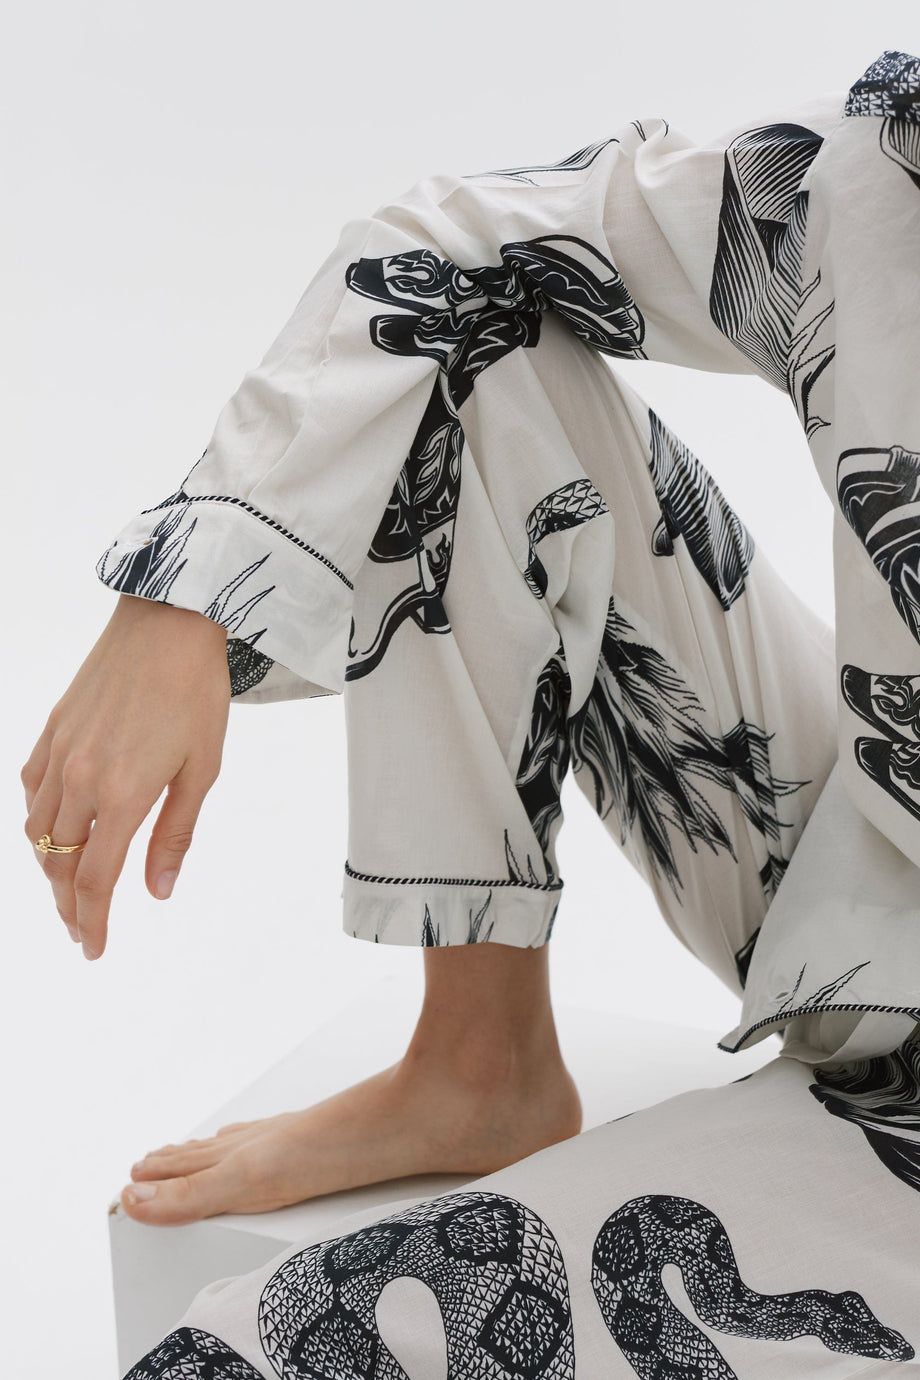 Long Pyjama Set Wild Icons Print Cream/Navy